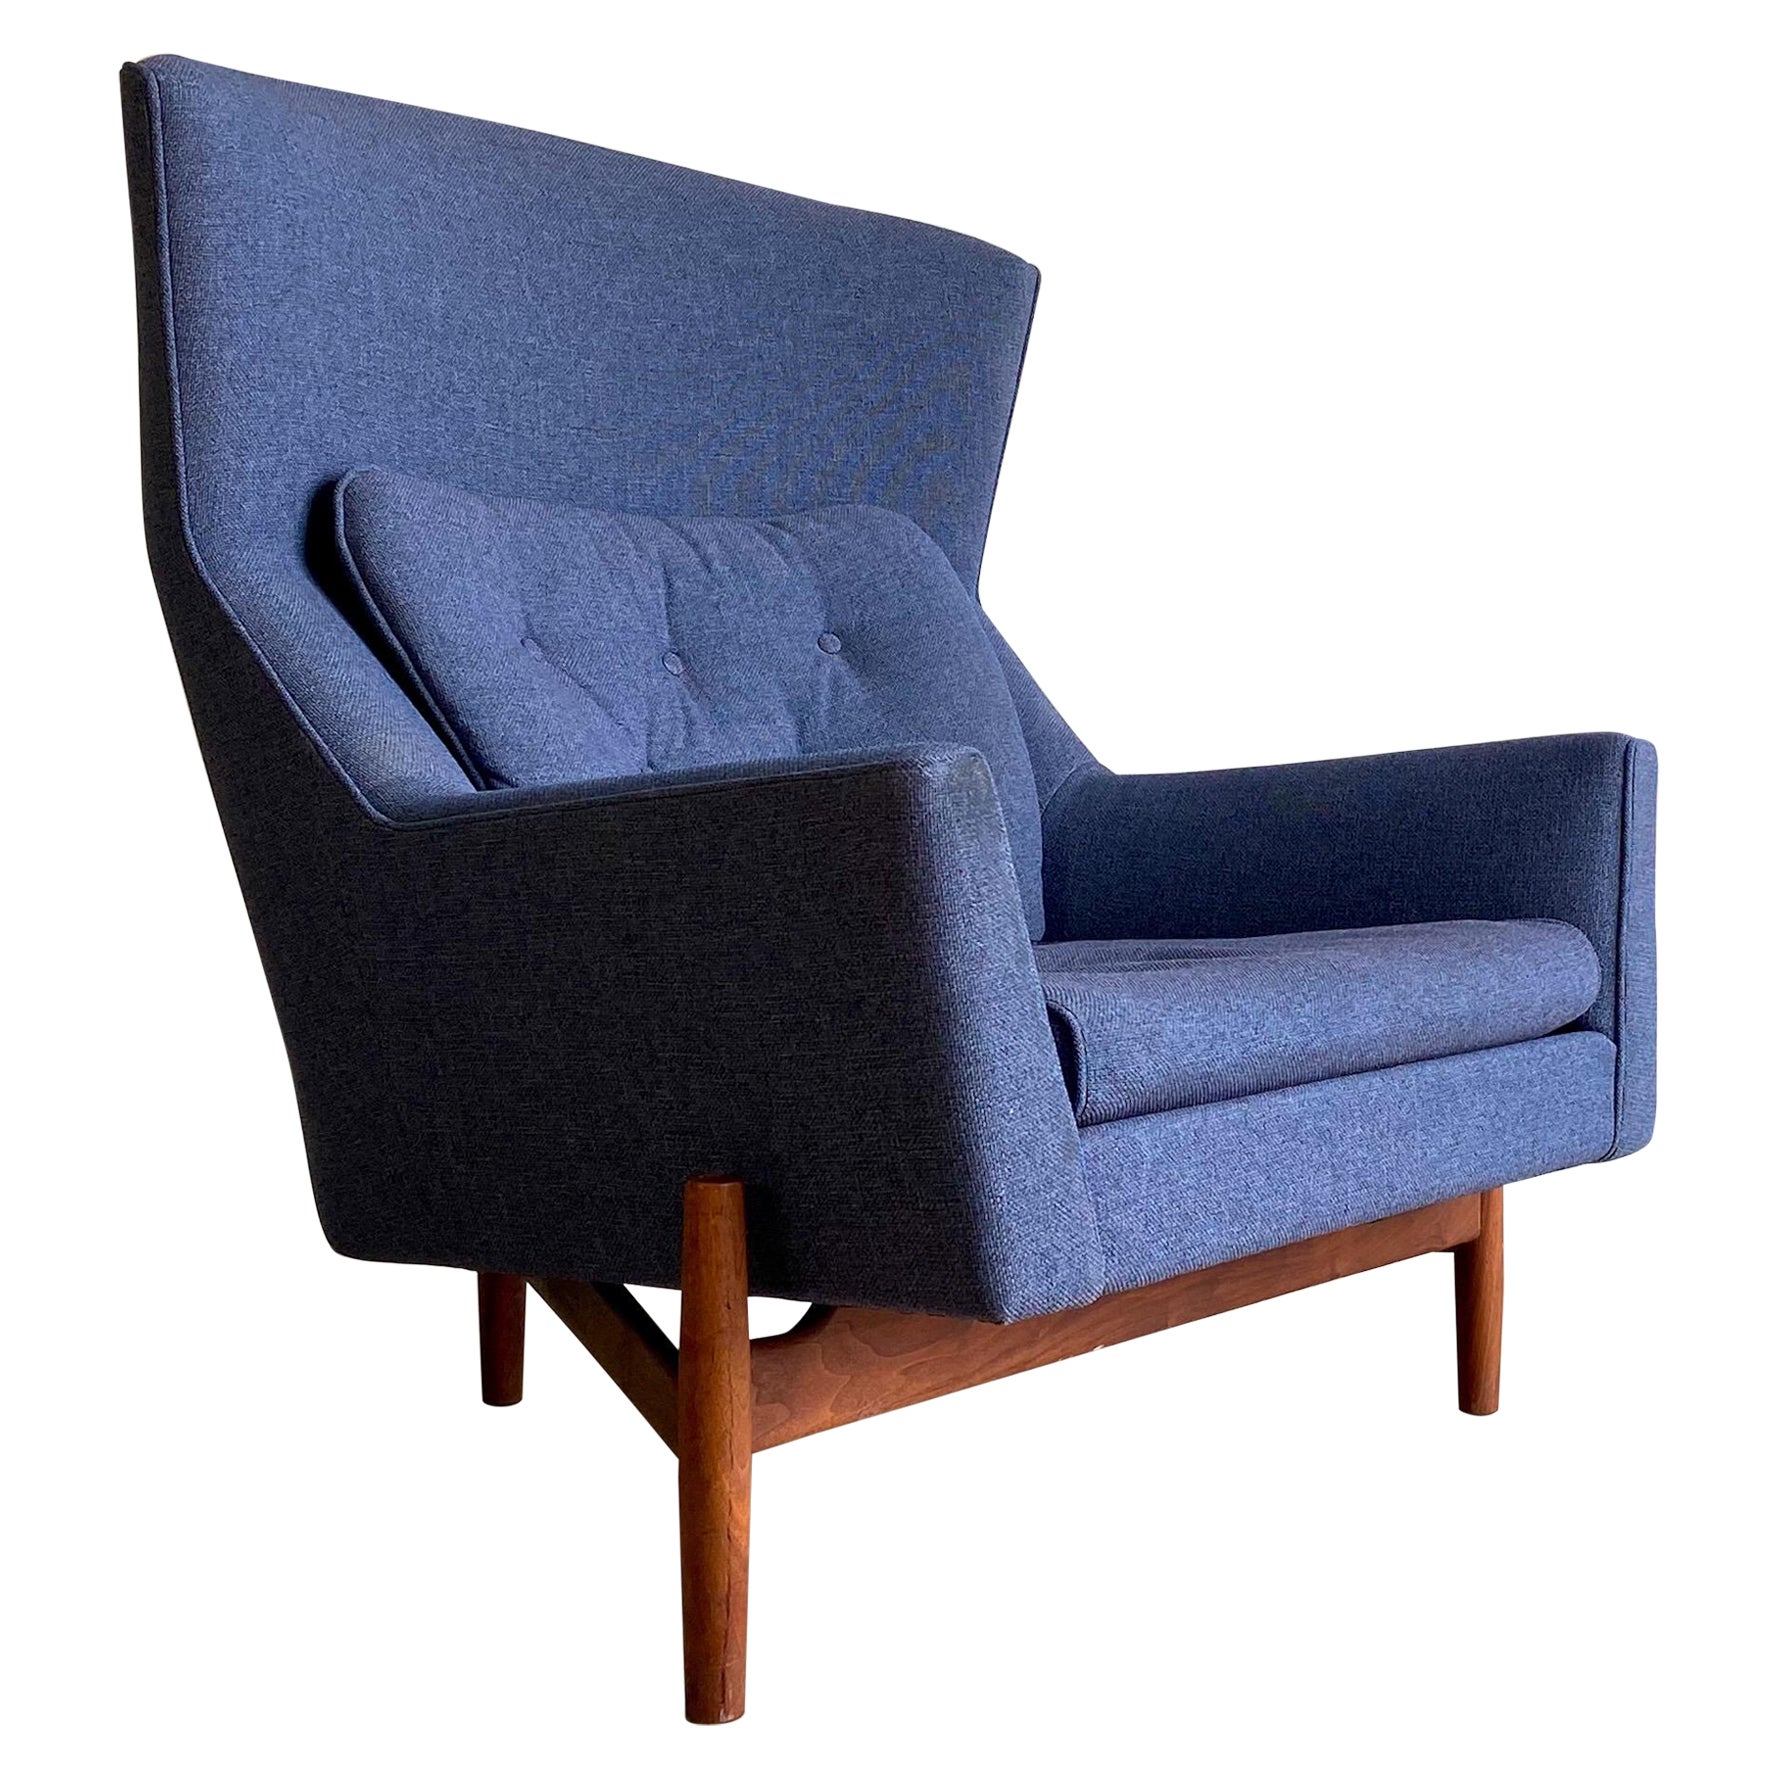 Jens Risom “Big Chair” Model 2117 Danish Modern Lounge Chair